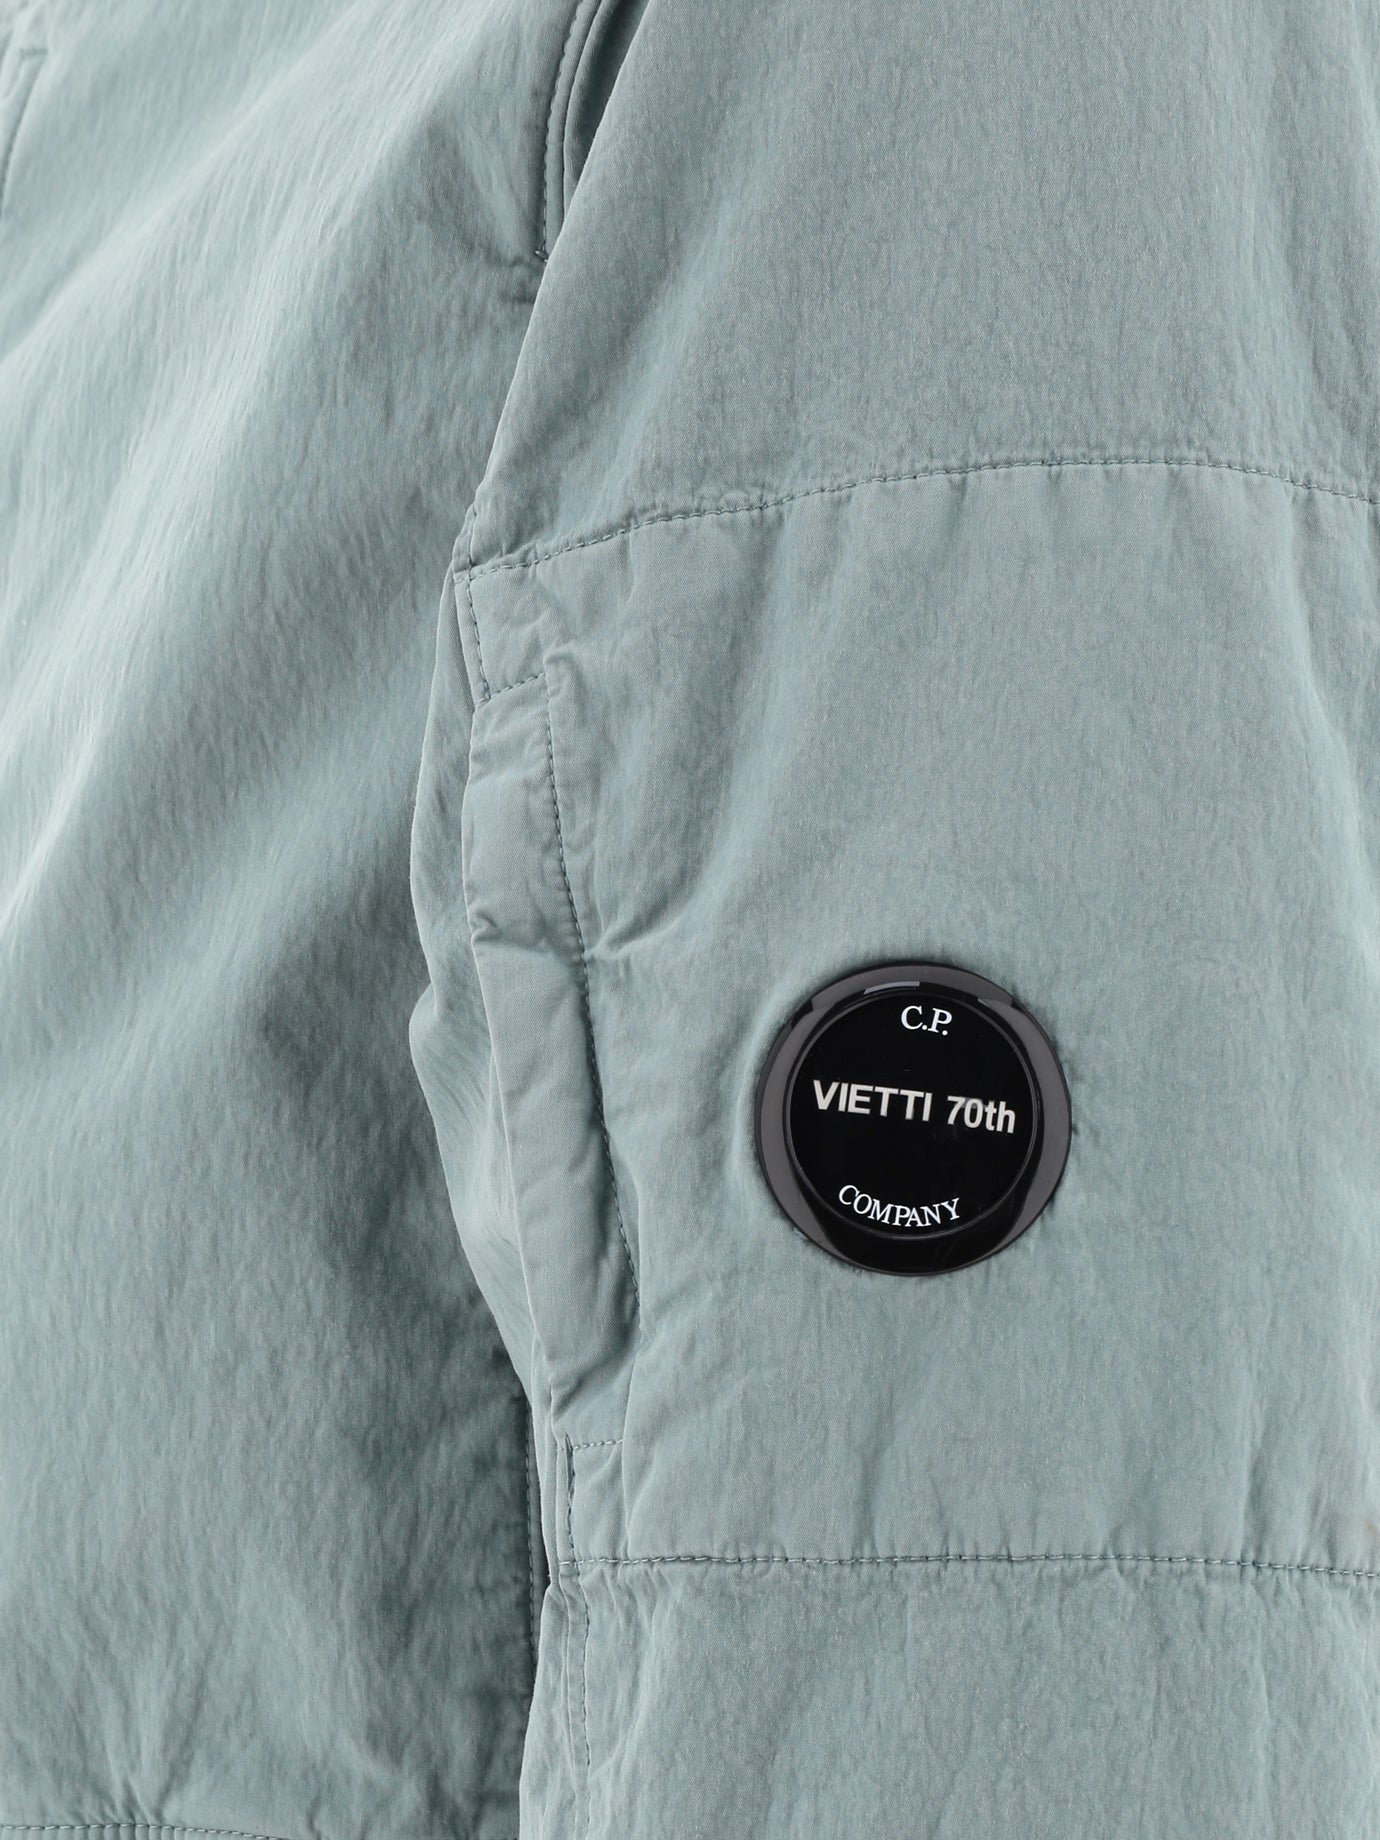 "C.P. Company x VIETTI 70th Anniversary" down jacket